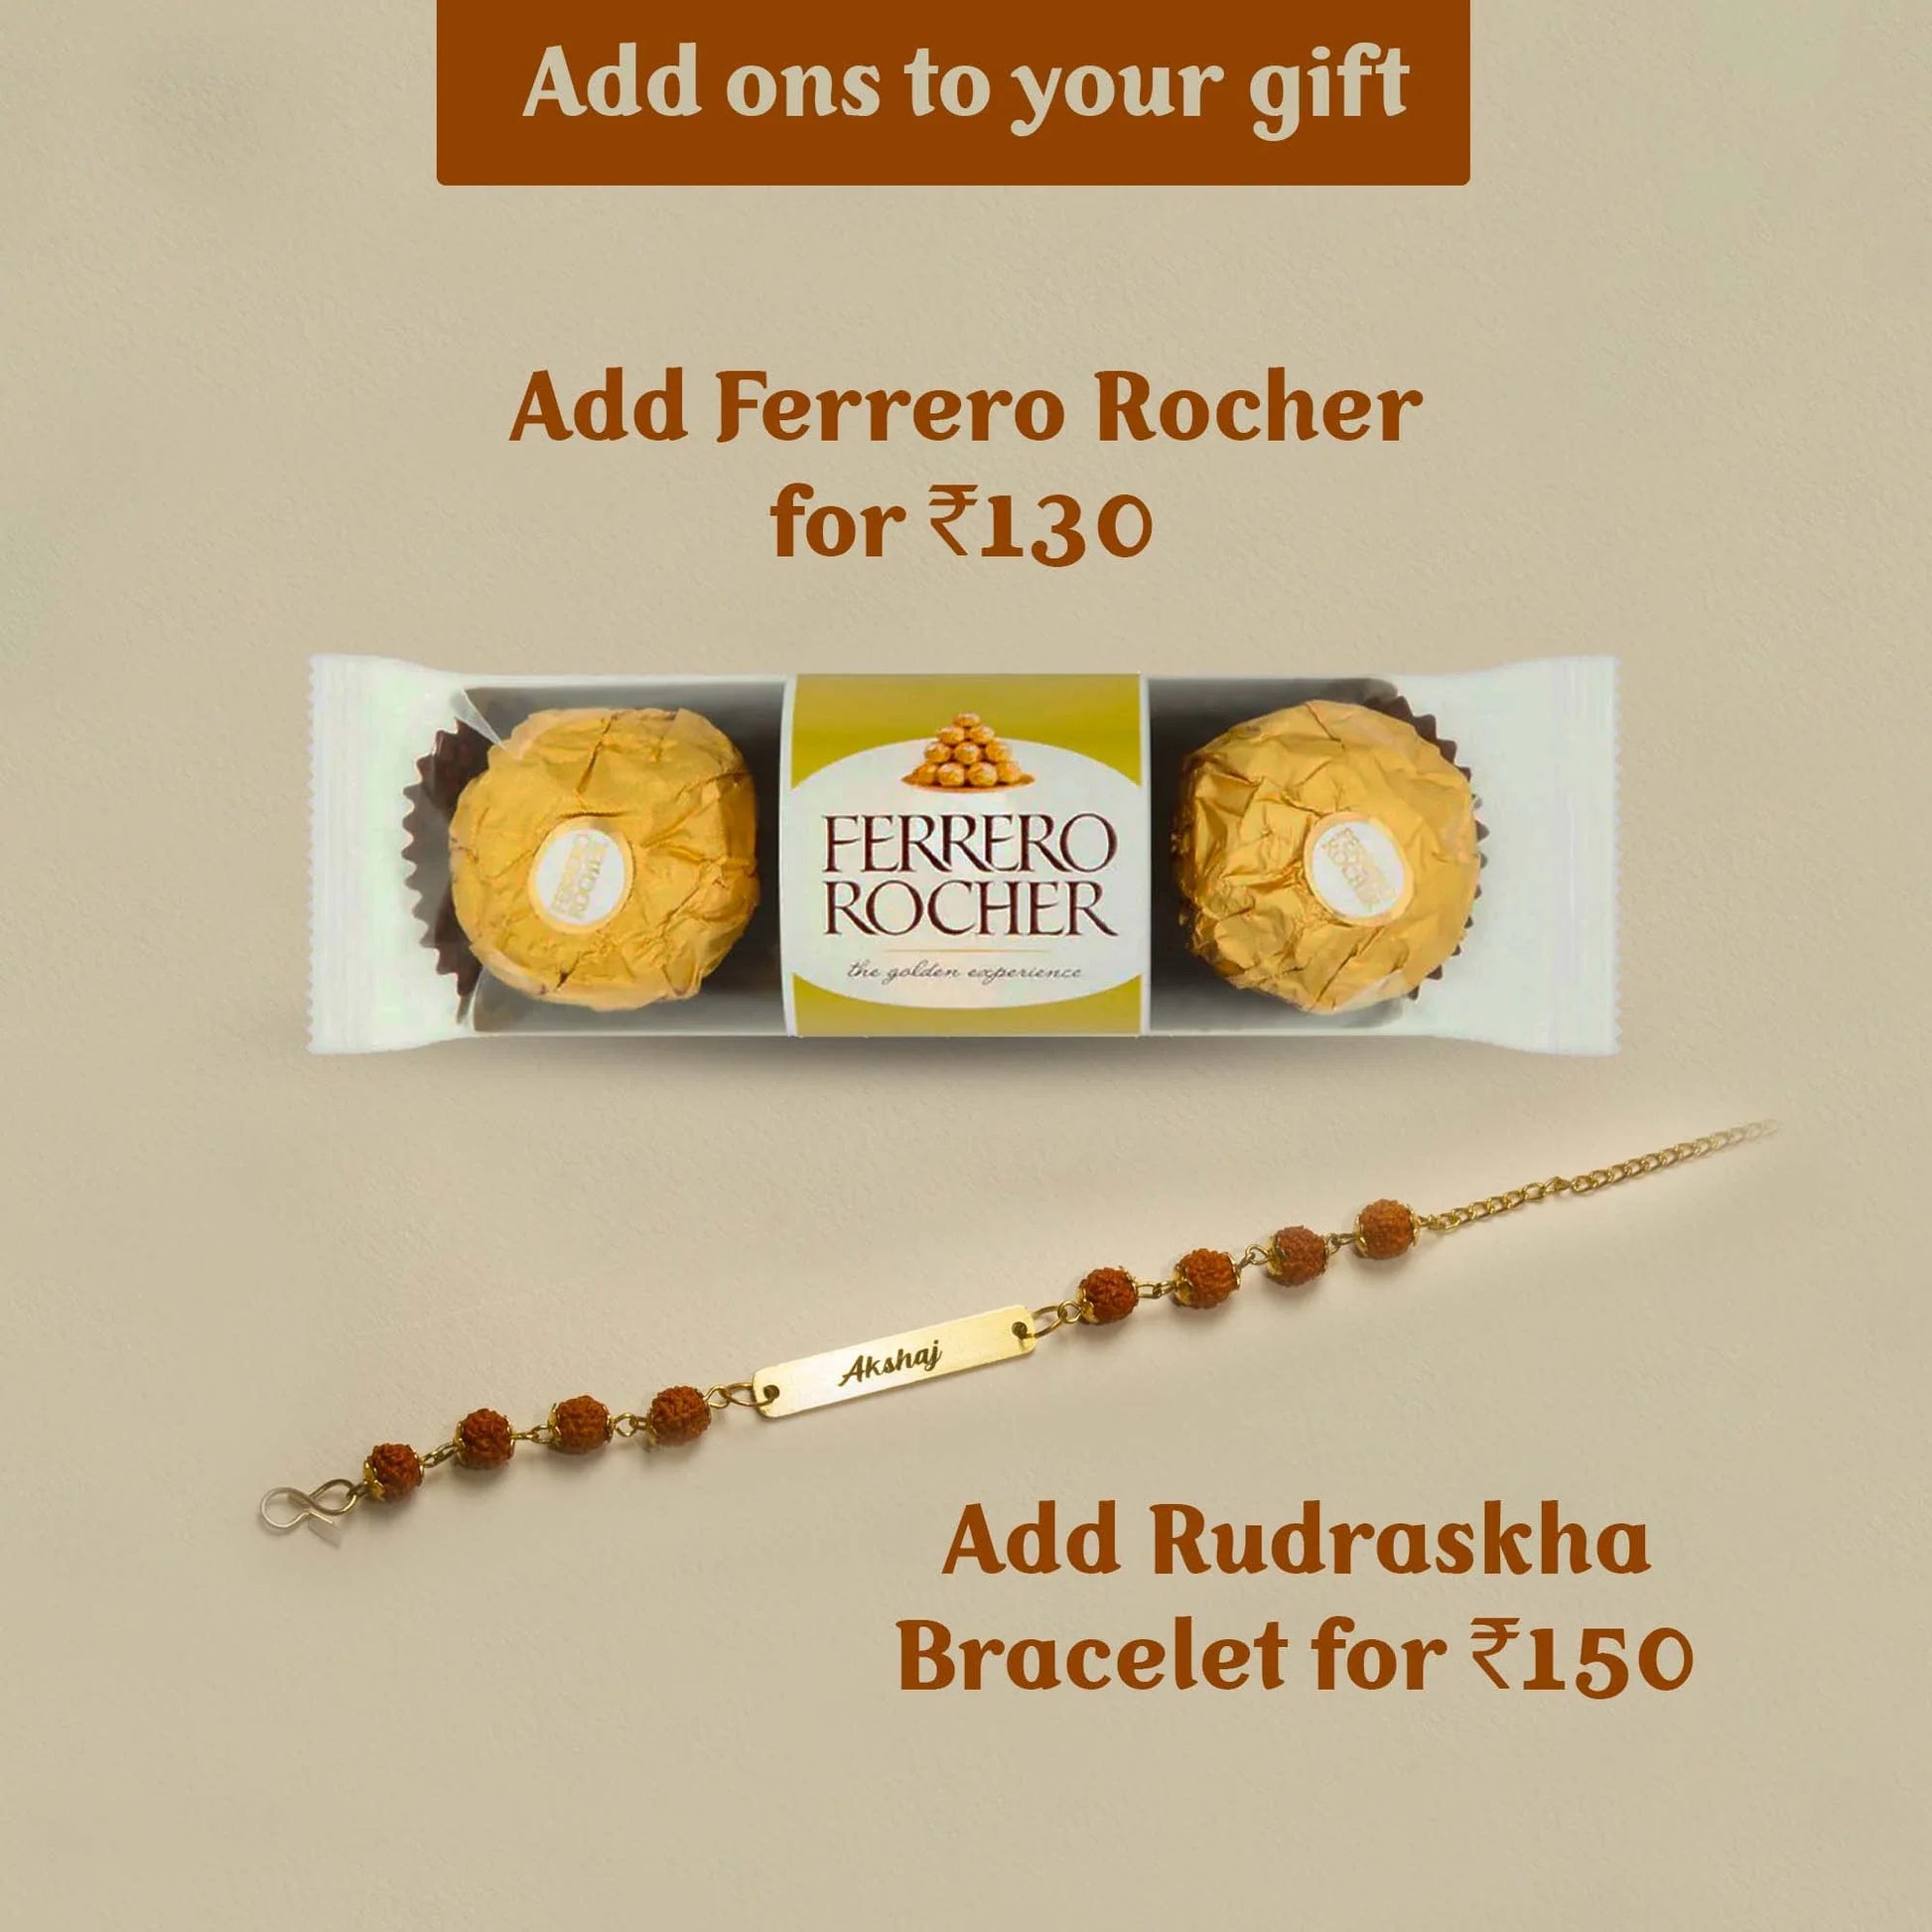 ferrero rocher chocolate and bracelet